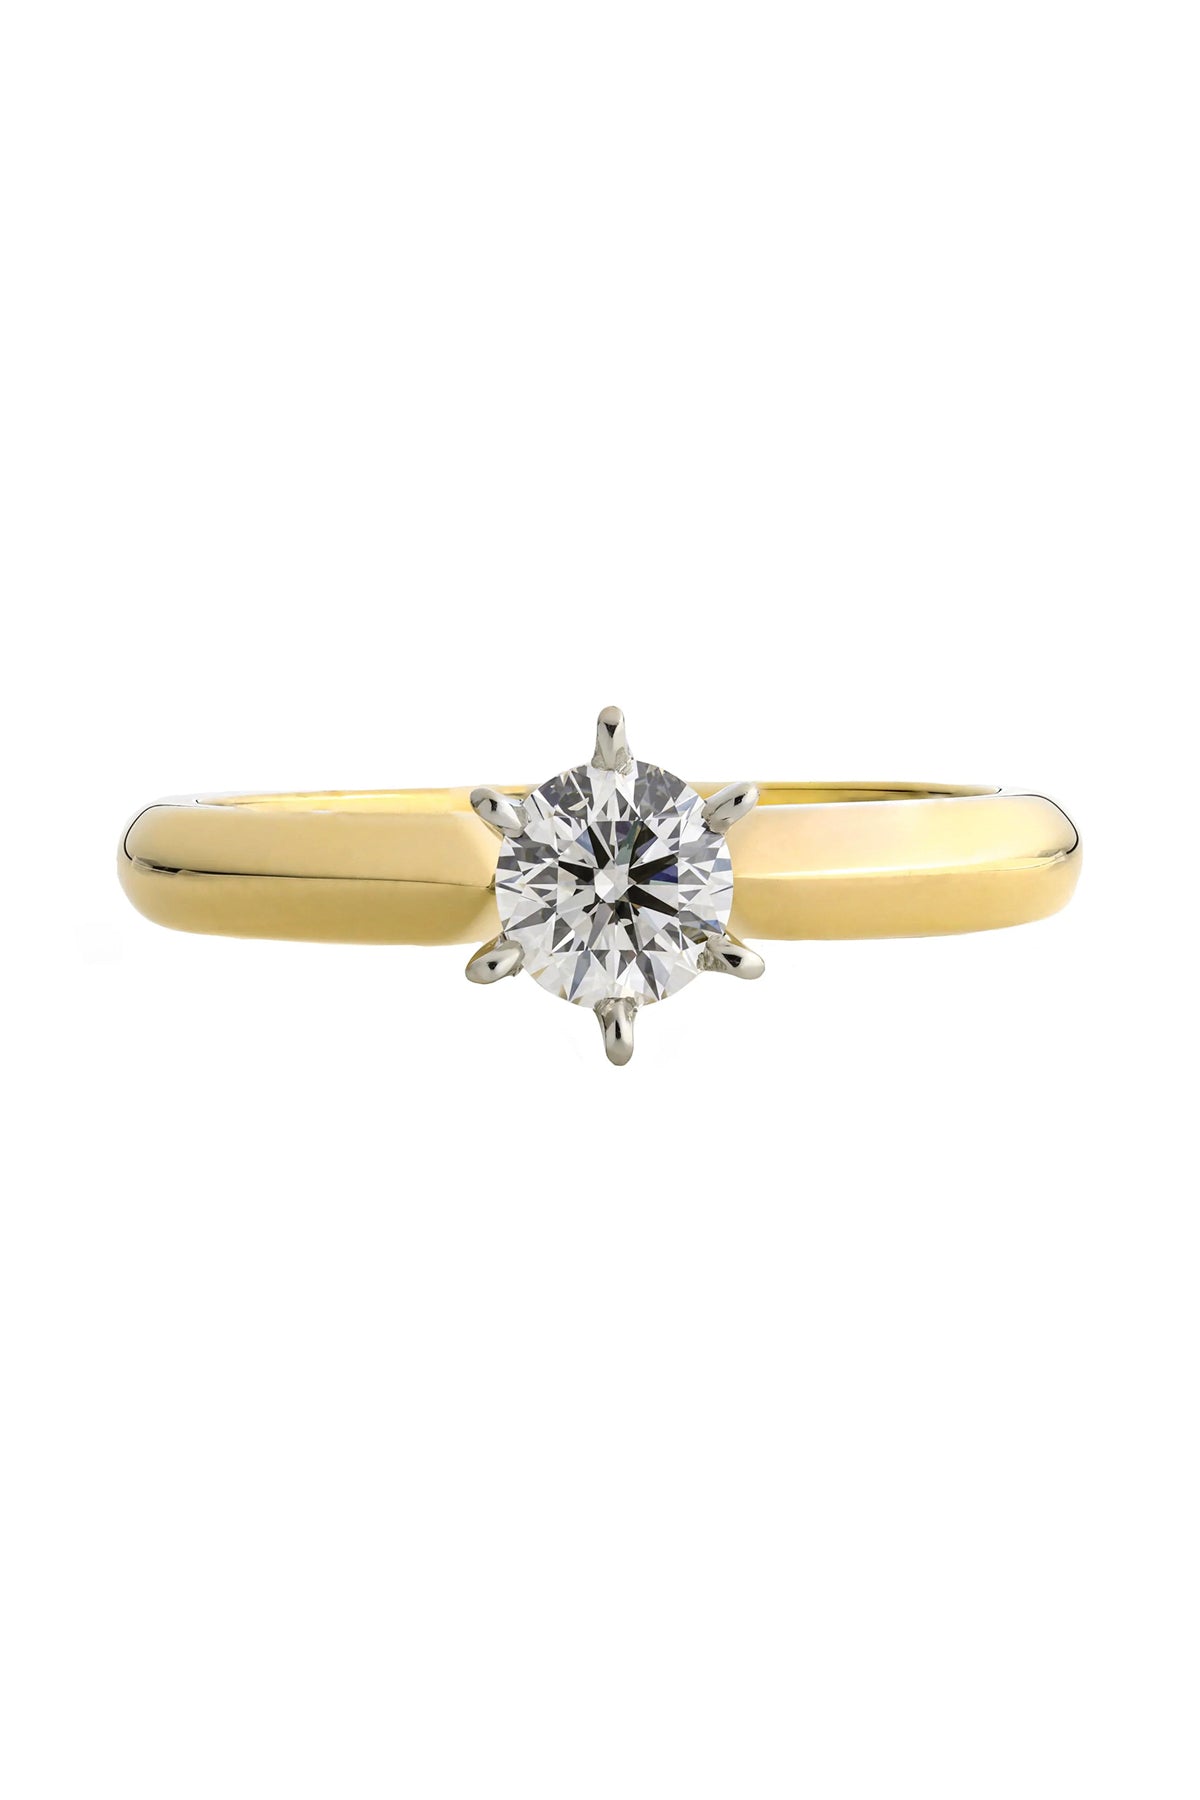 LeGassick 0.50 carat Diamond Solitaire Engagement Ring available at LeGassick Diamonds and Jewellery Gold Coast, Australia